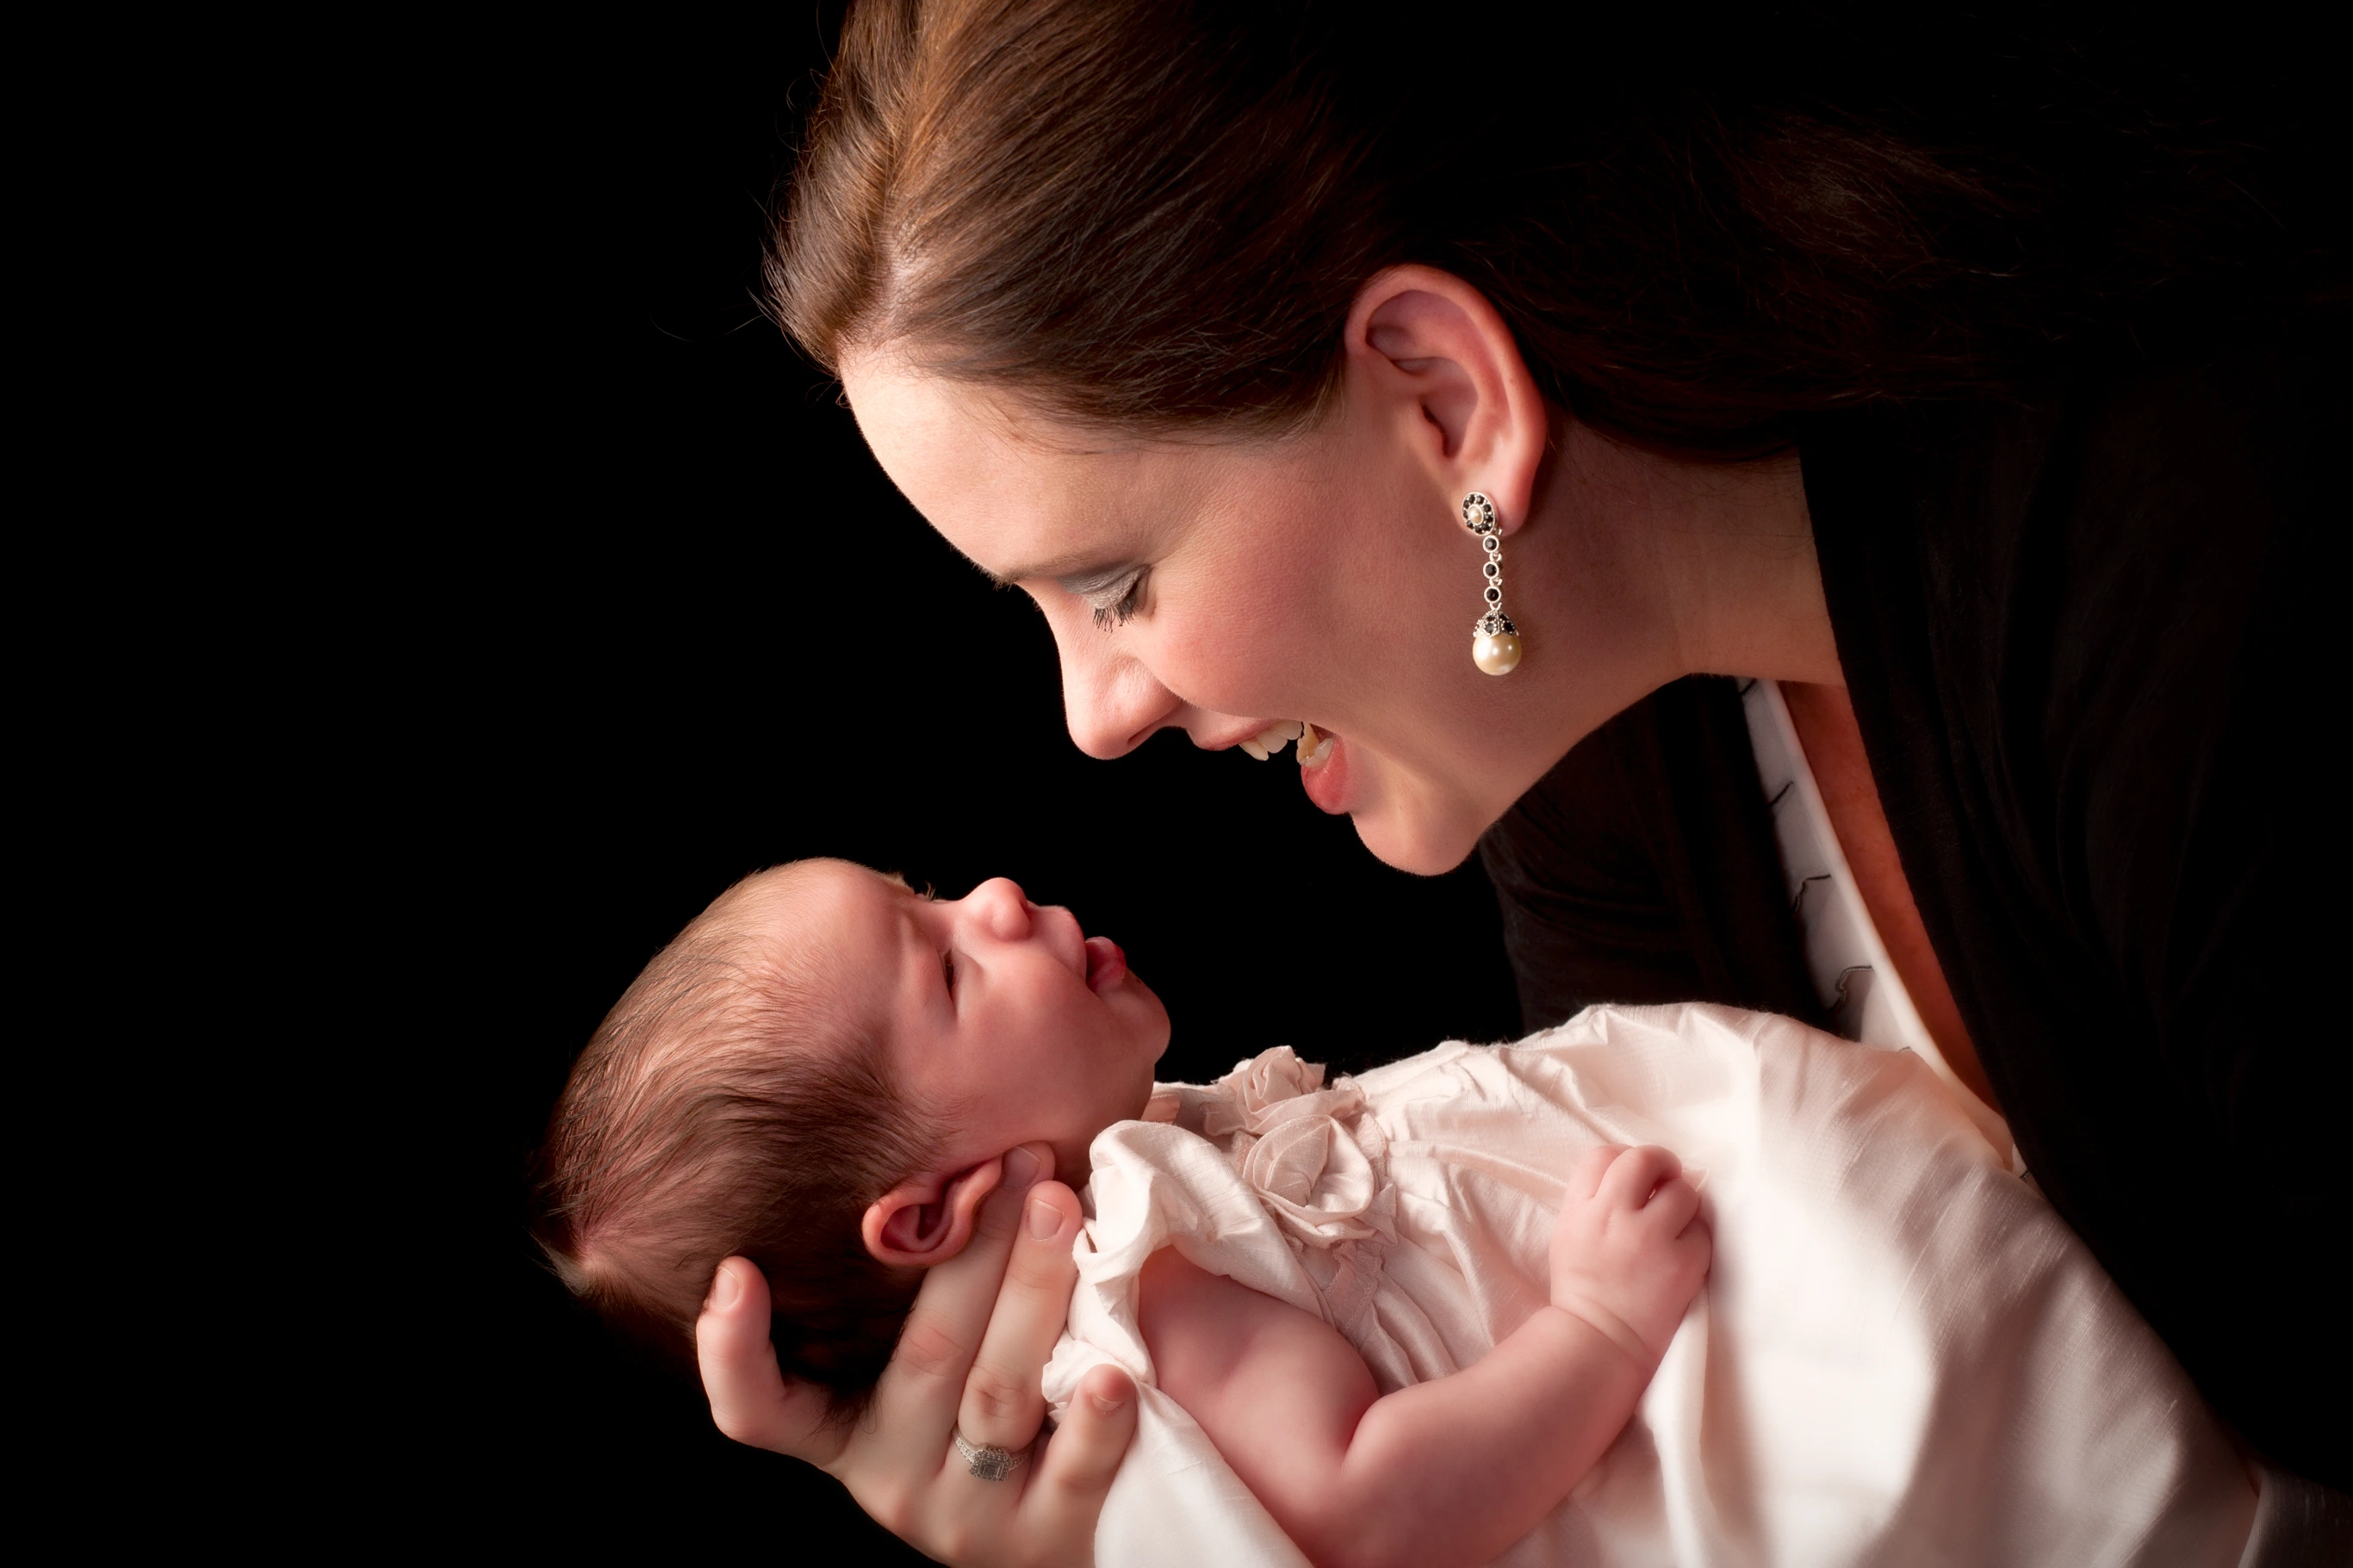 Mother holds baby in newborn portrait